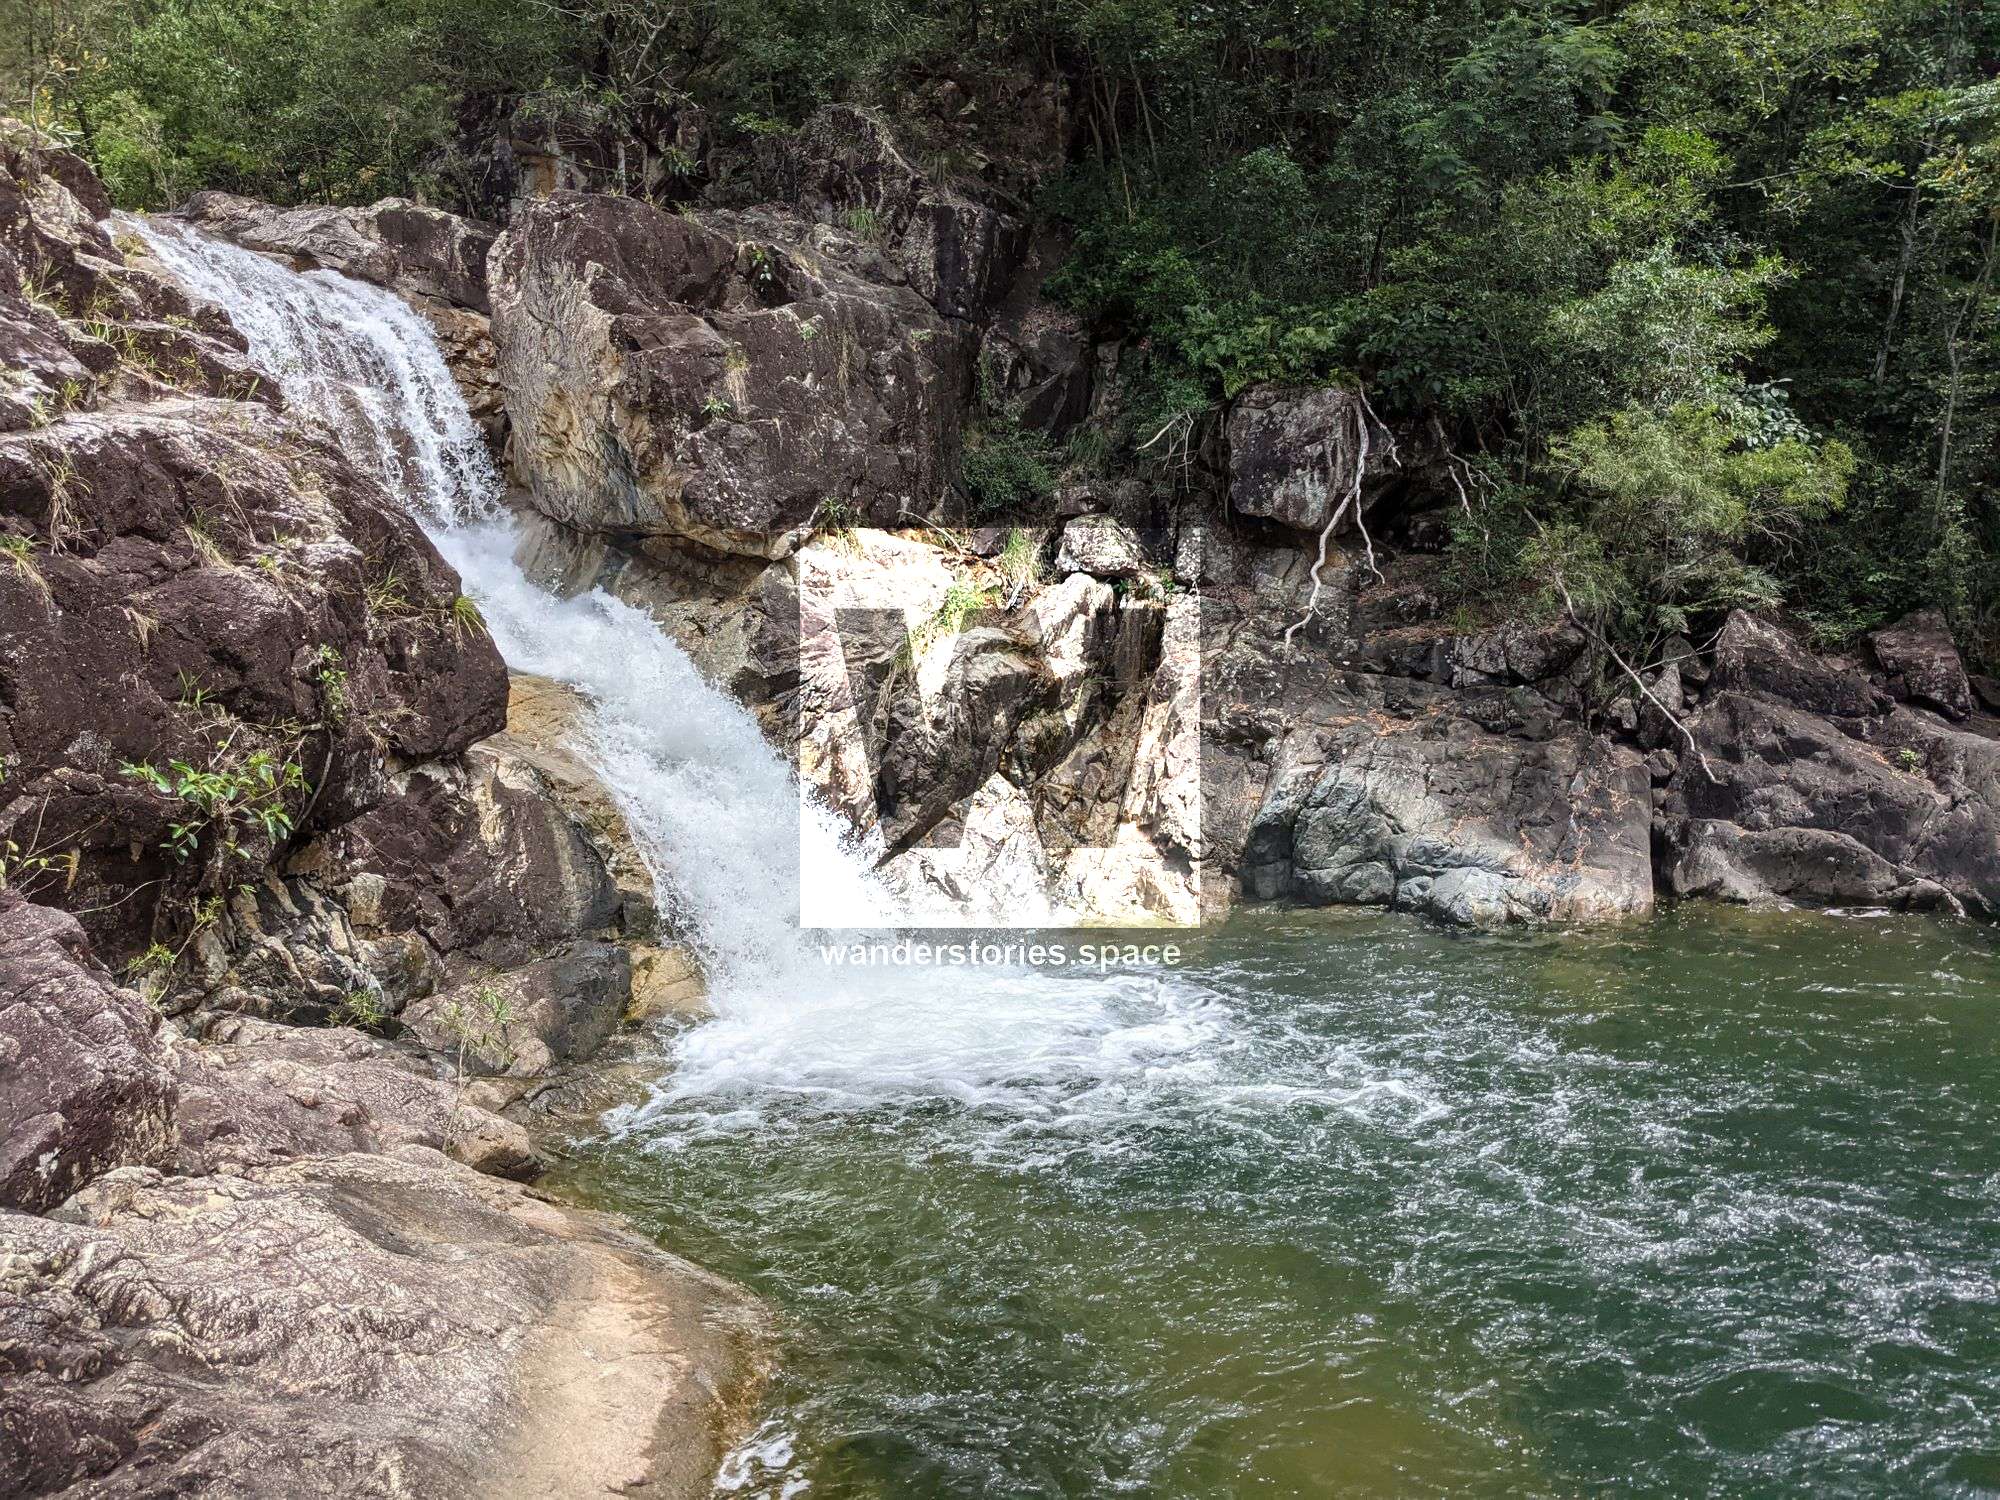 A stunning waterfall tucked away